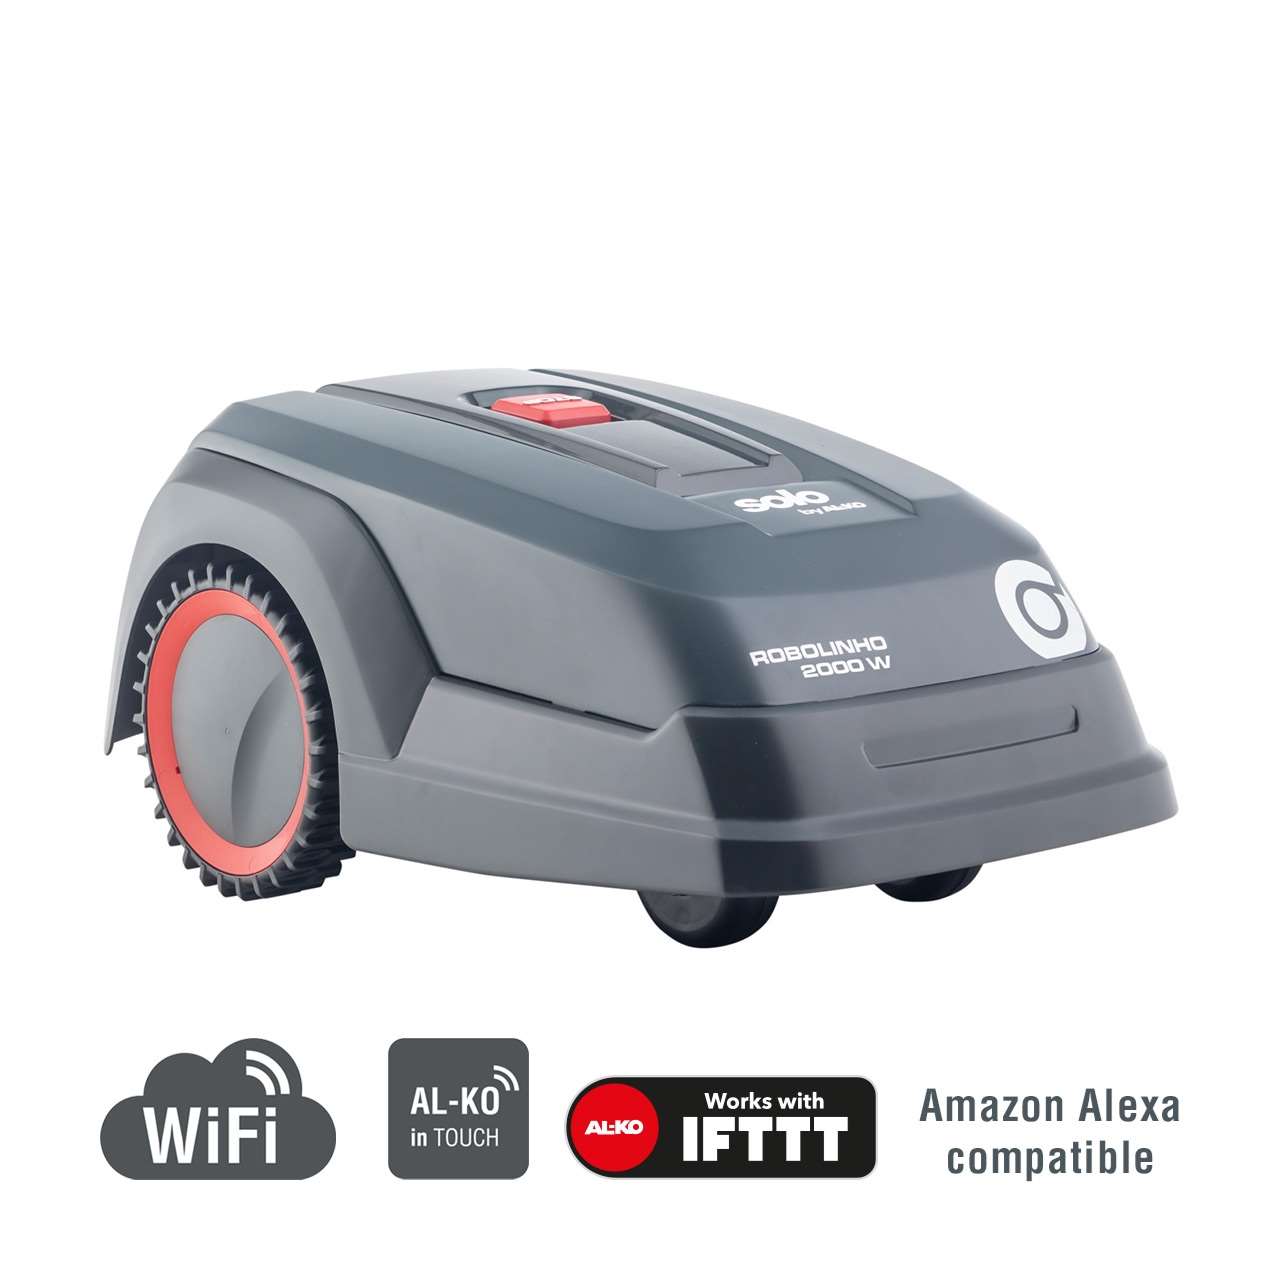 127571-robotic-lawnmower-robolinho-2000-w-smart-cloud-icons